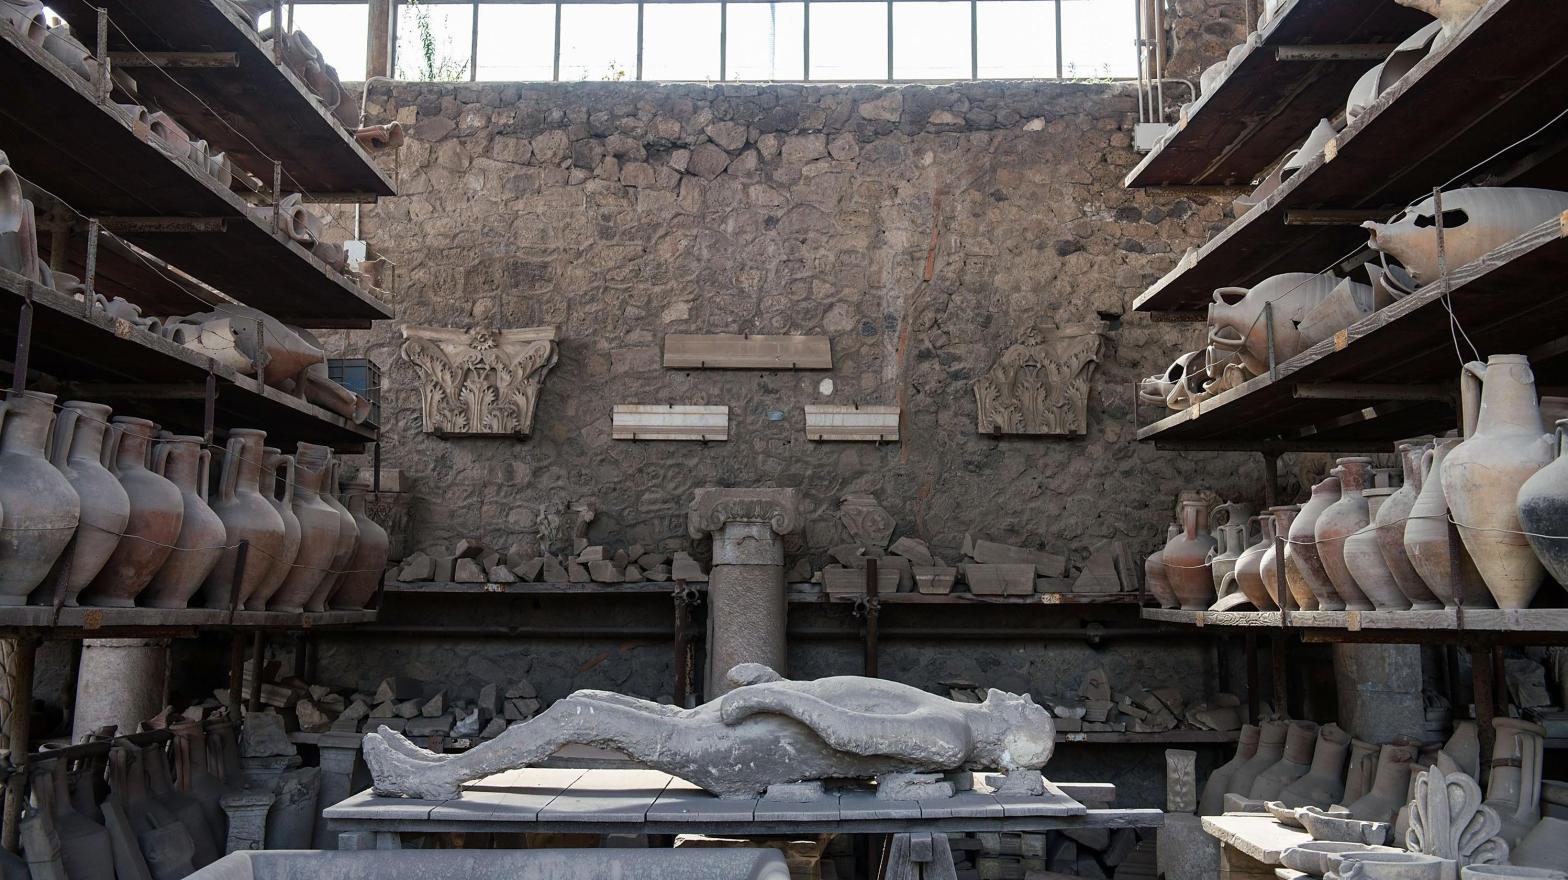 A body cast and amphorae in a storage area in Pompeii. (Photo: Giorgio Cosulich, Getty Images)